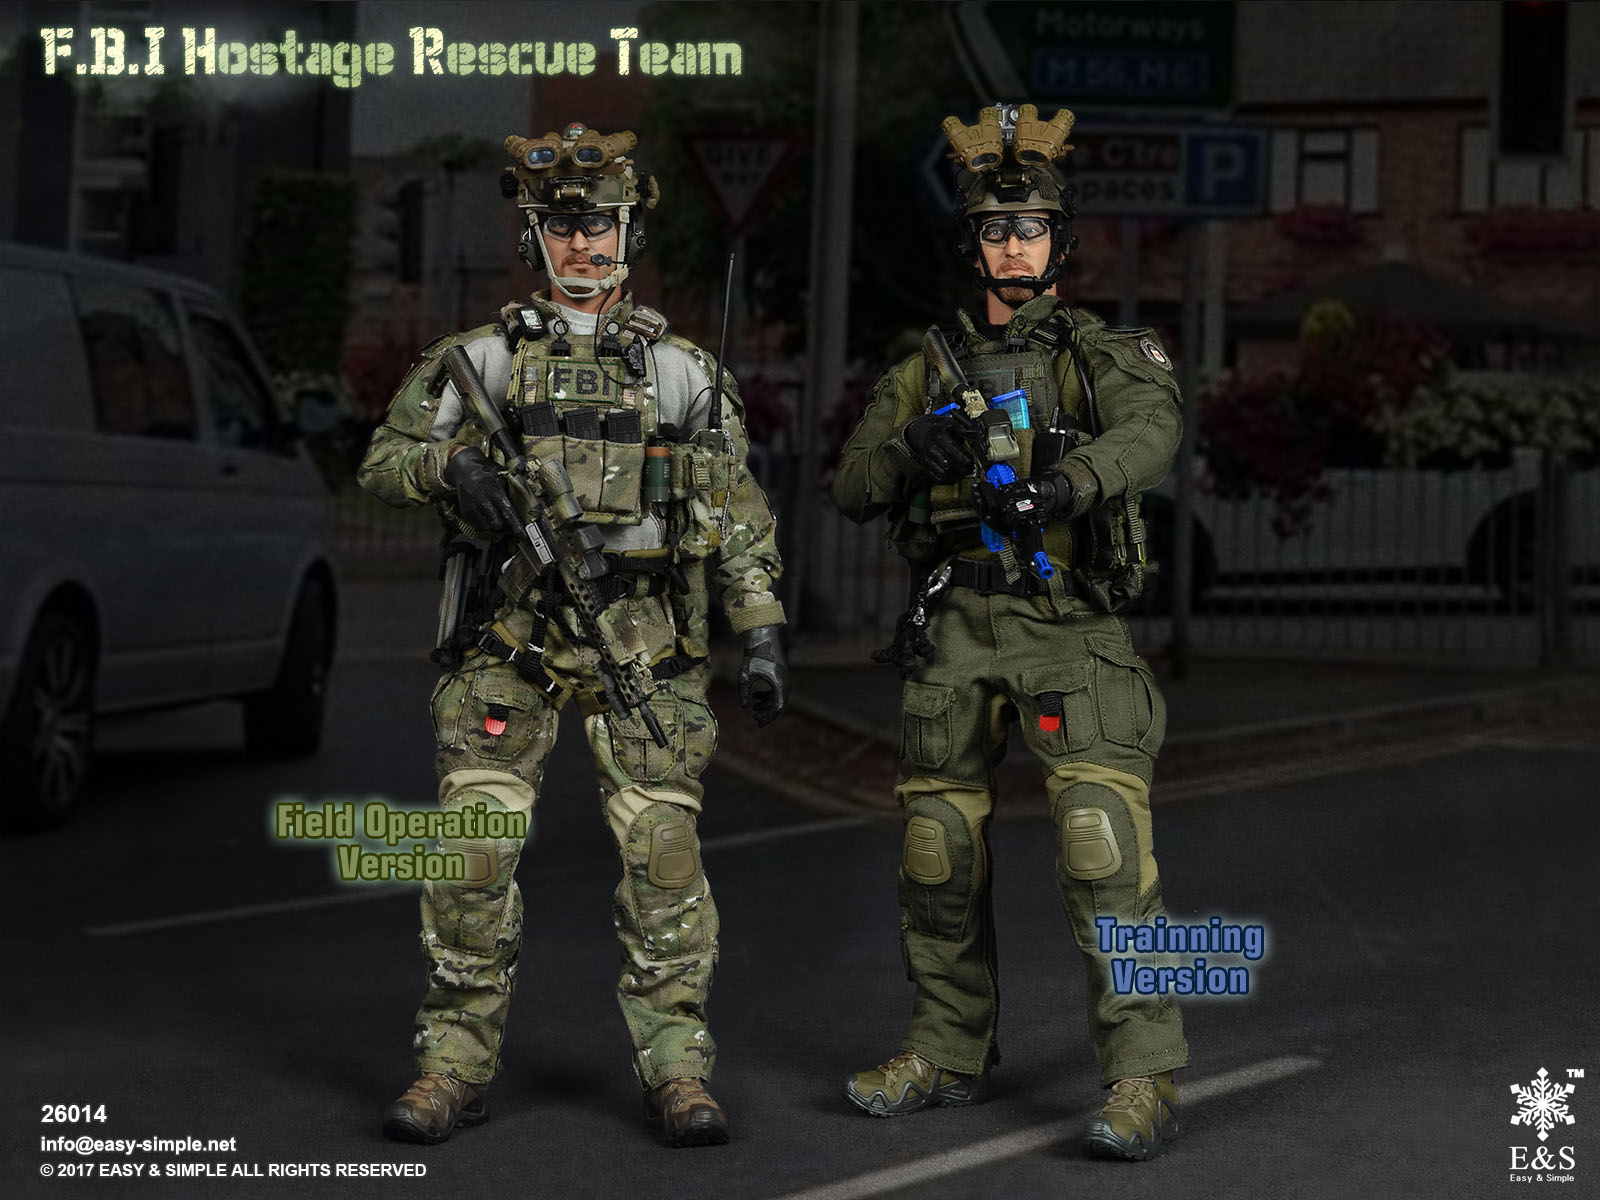 bi hostage rescue team pay